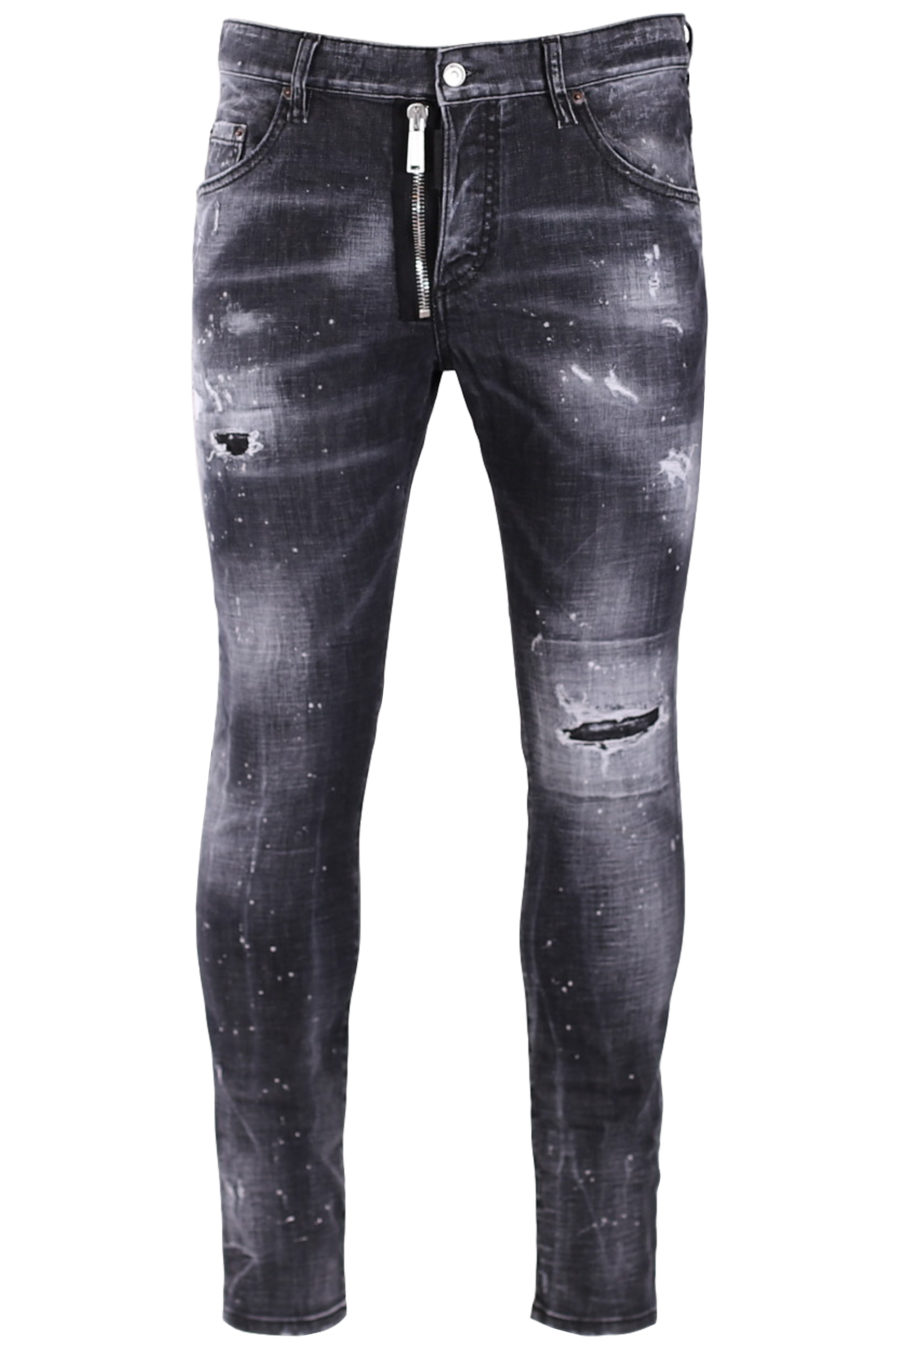 Schwarze "Skater" Jeans mit Reißverschluss - dd0a25475583bf658822331e4af2bca072287ca5